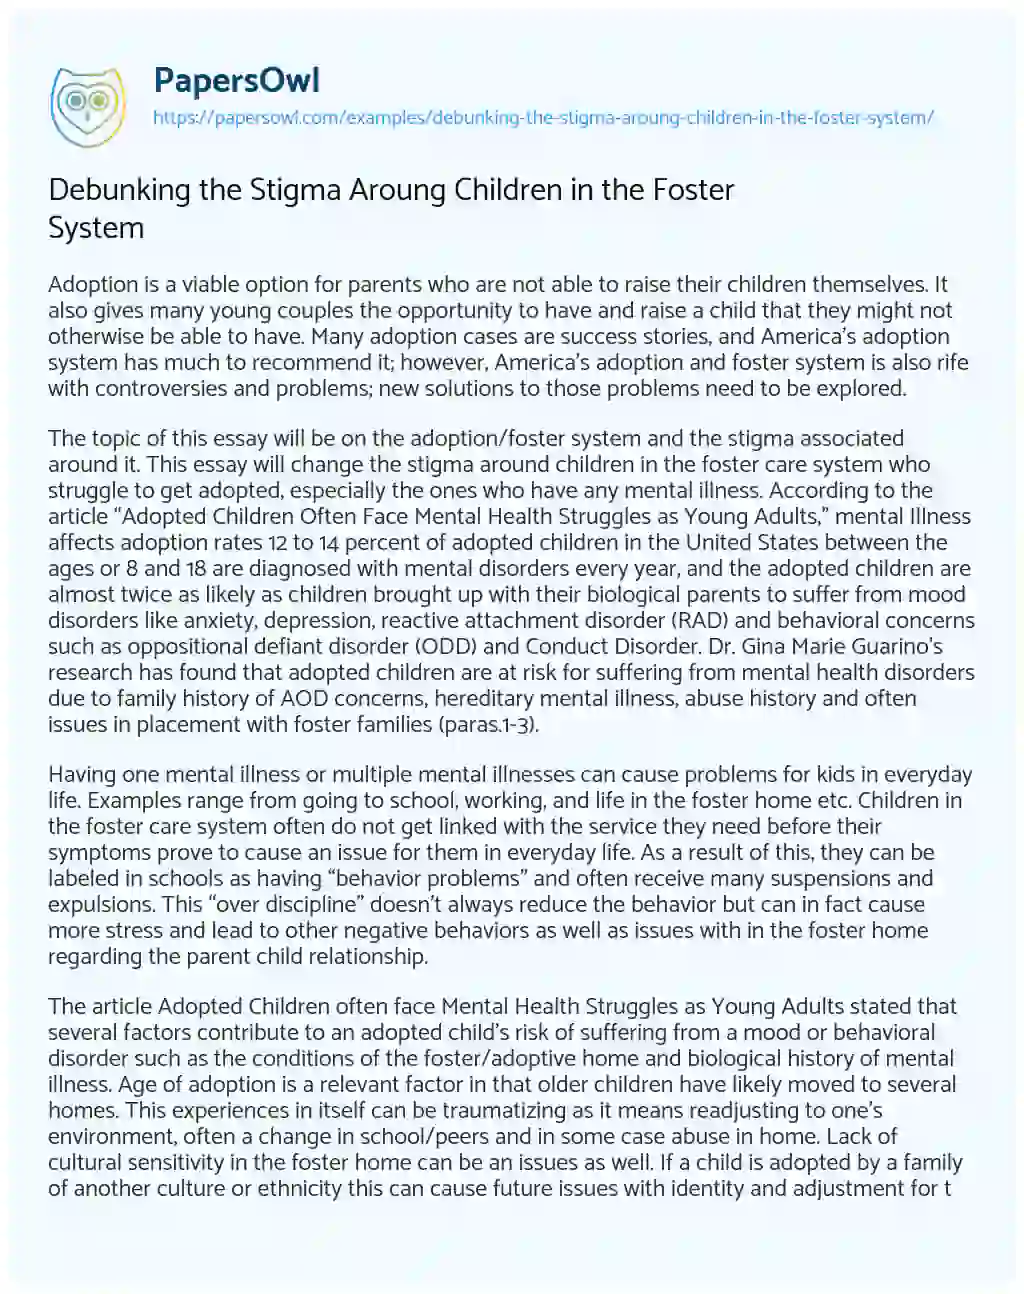 Debunking the Stigma Aroung Children in the Foster System essay